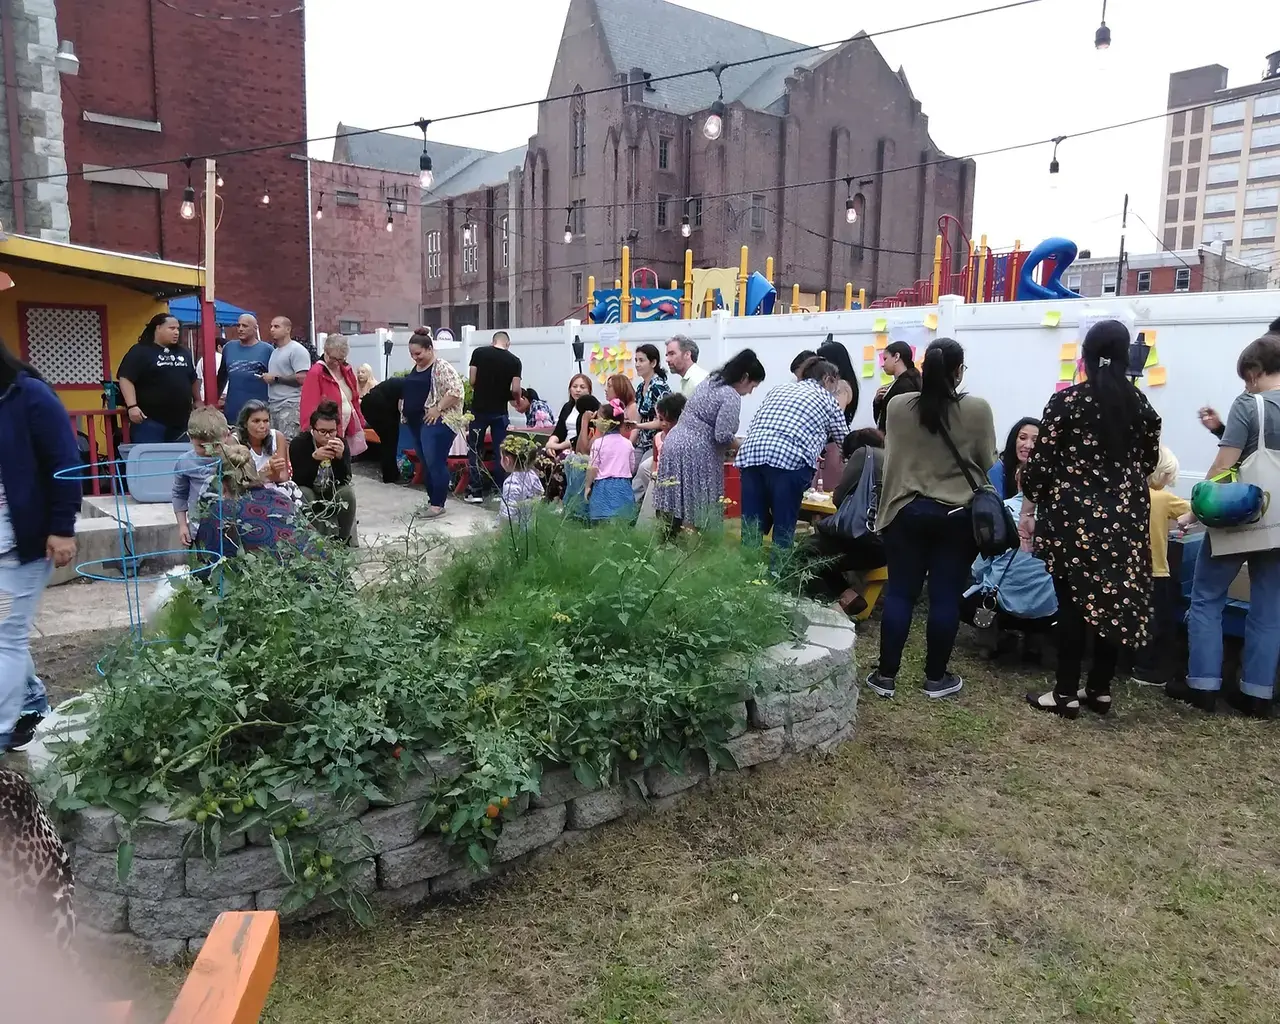 Garden Festival, Norris Square Community Alliance, 2018. Photo courtesy of the Norris Square Community Alliance.